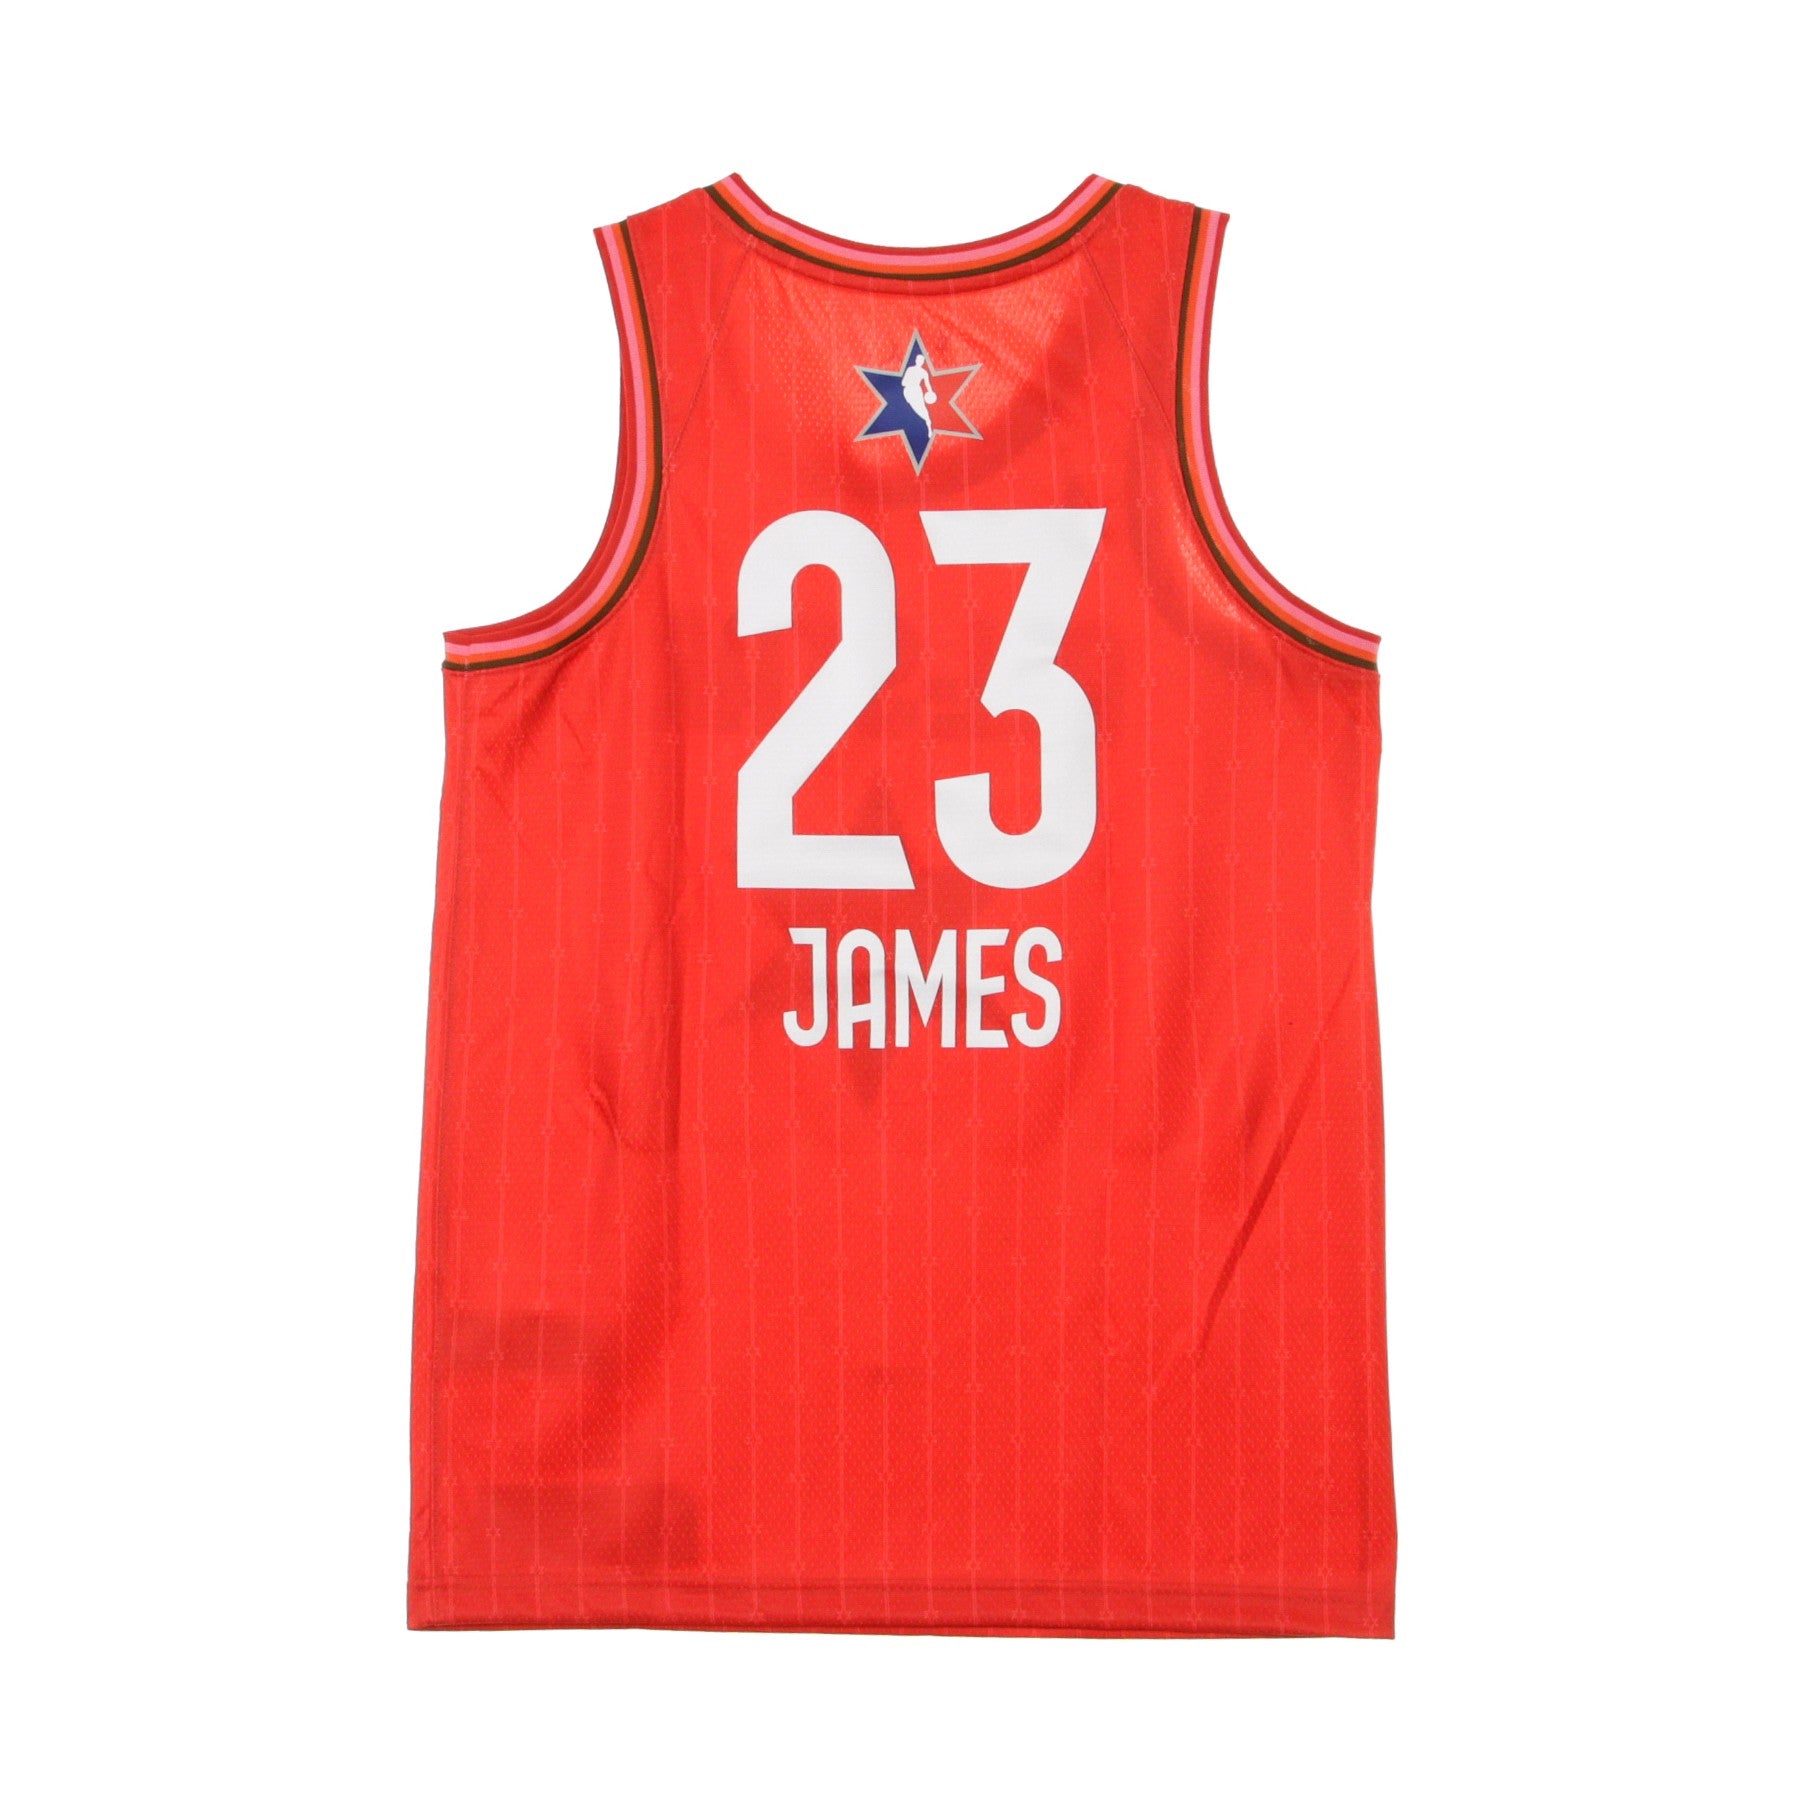 Jordan Nba, Canotta Basket Uomo Nba Swingman Jersey No 23 Lebron James, University Red